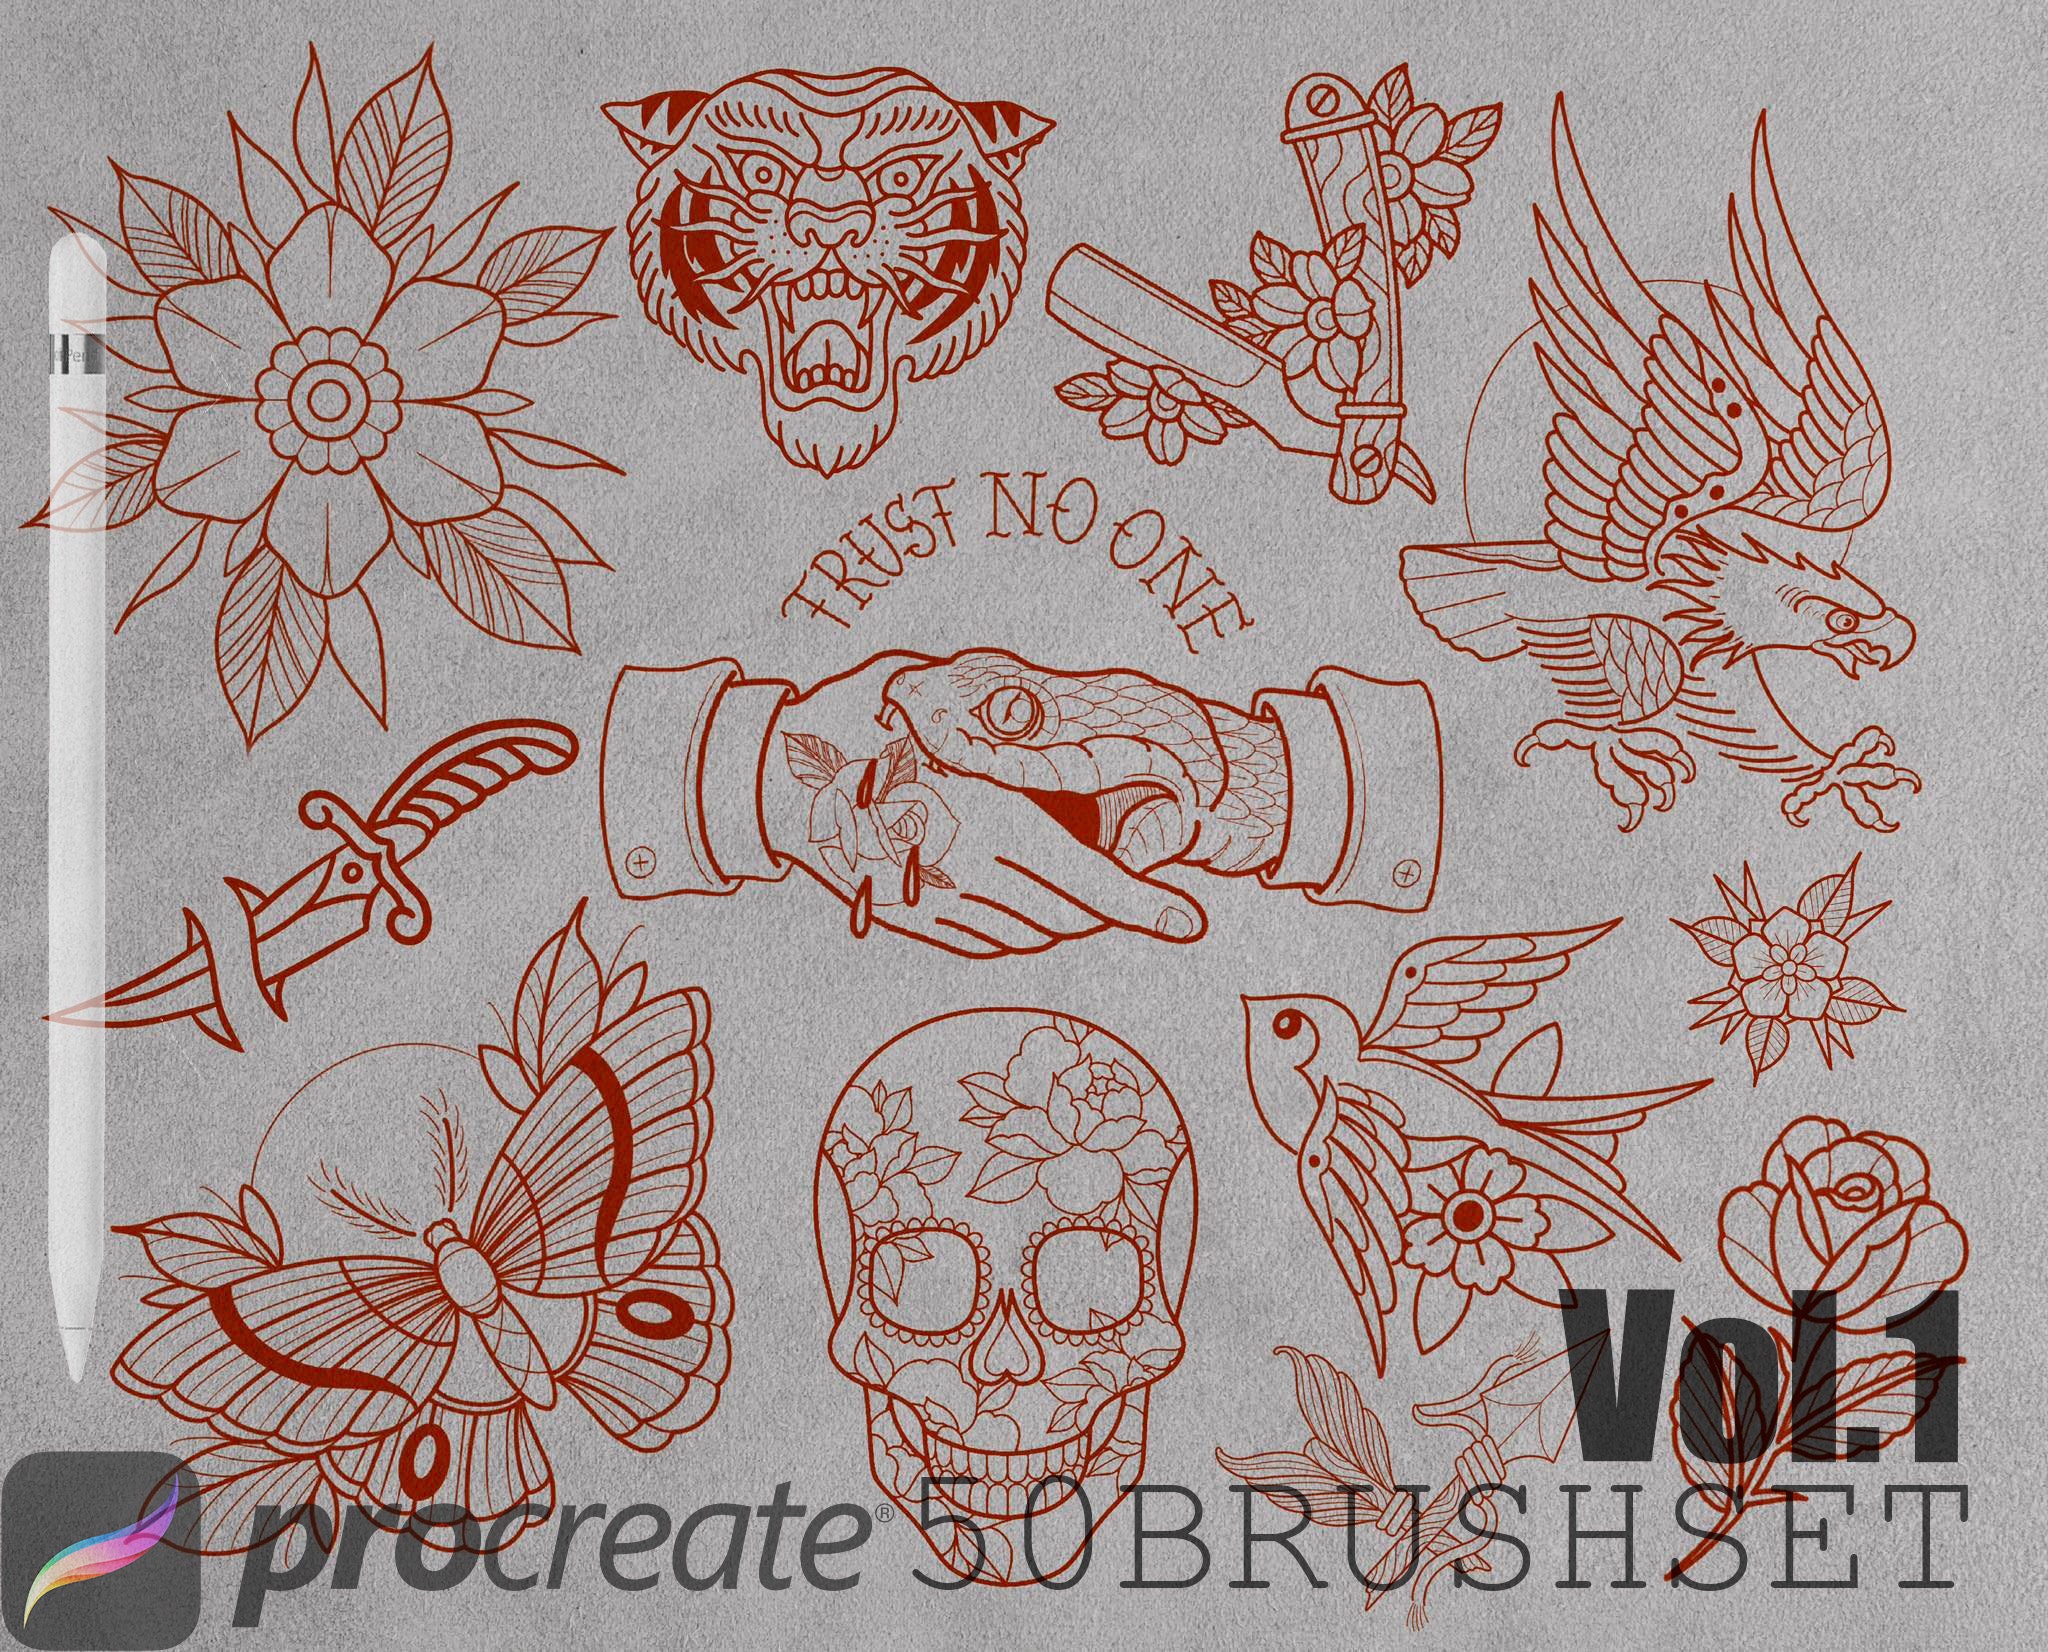 Procreate TRADITIONAL Vol.1 Tattoo Design Procreate Brush - Etsy